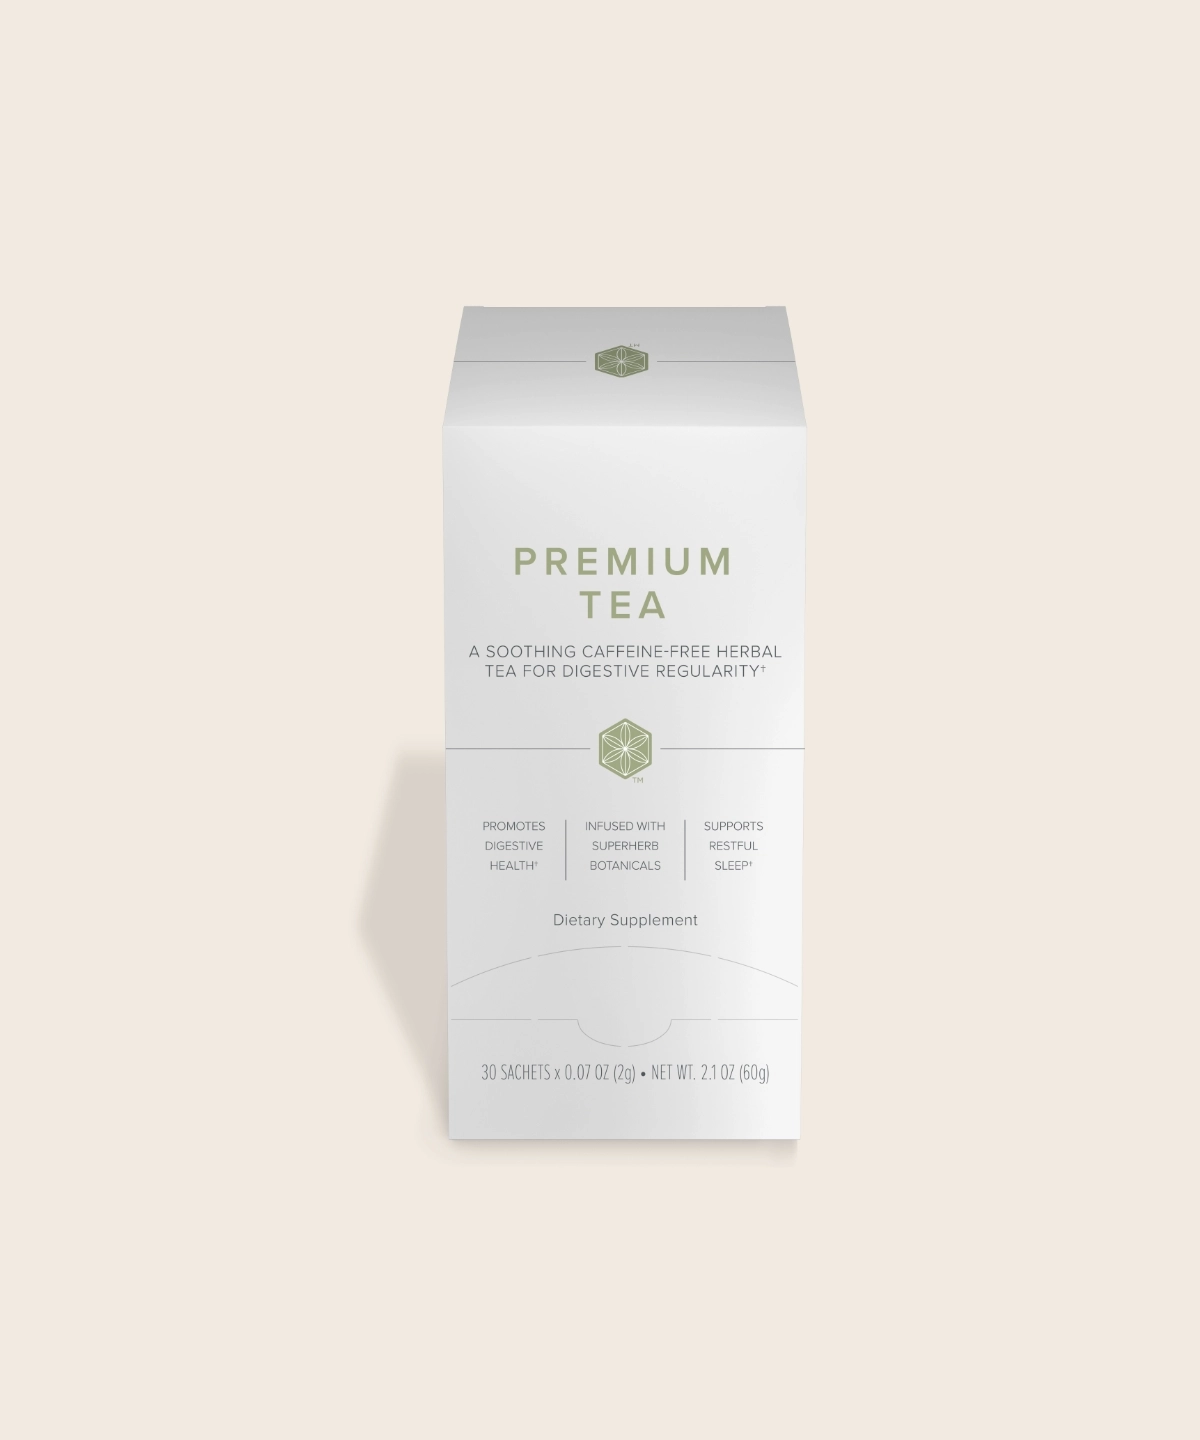 isagenix premium tea is a soothing caffeine-free herbal tea for digestive regularity